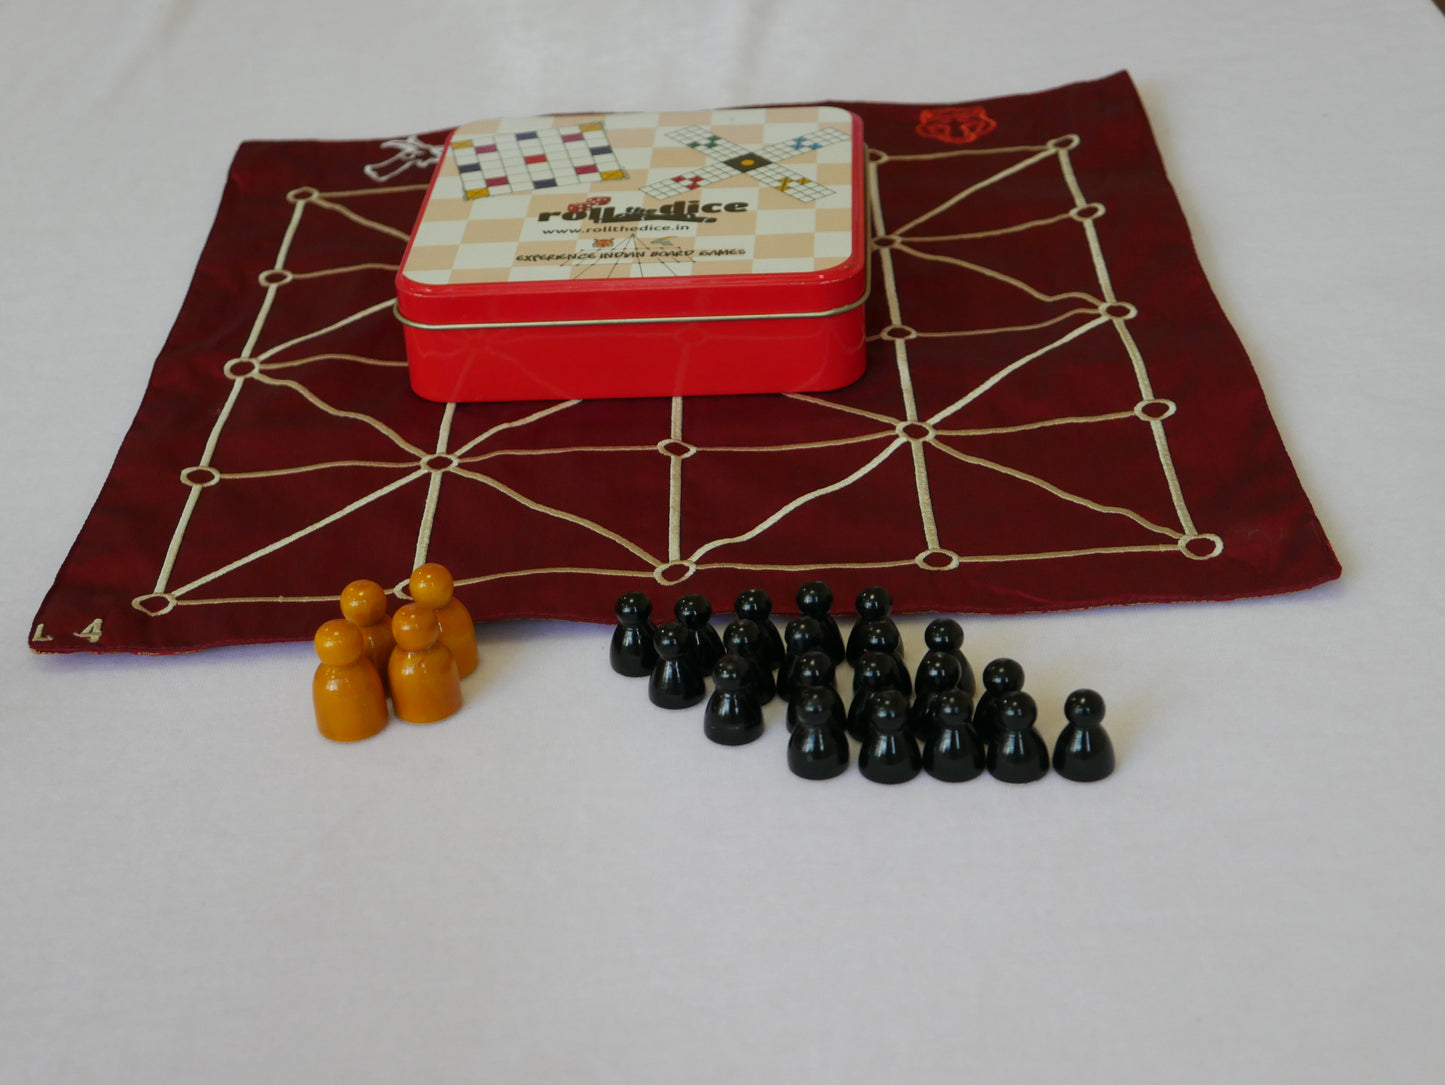 Indian traditonal board game - Tiger and goat hunting game, aadu puli aatam , puli jhoodam